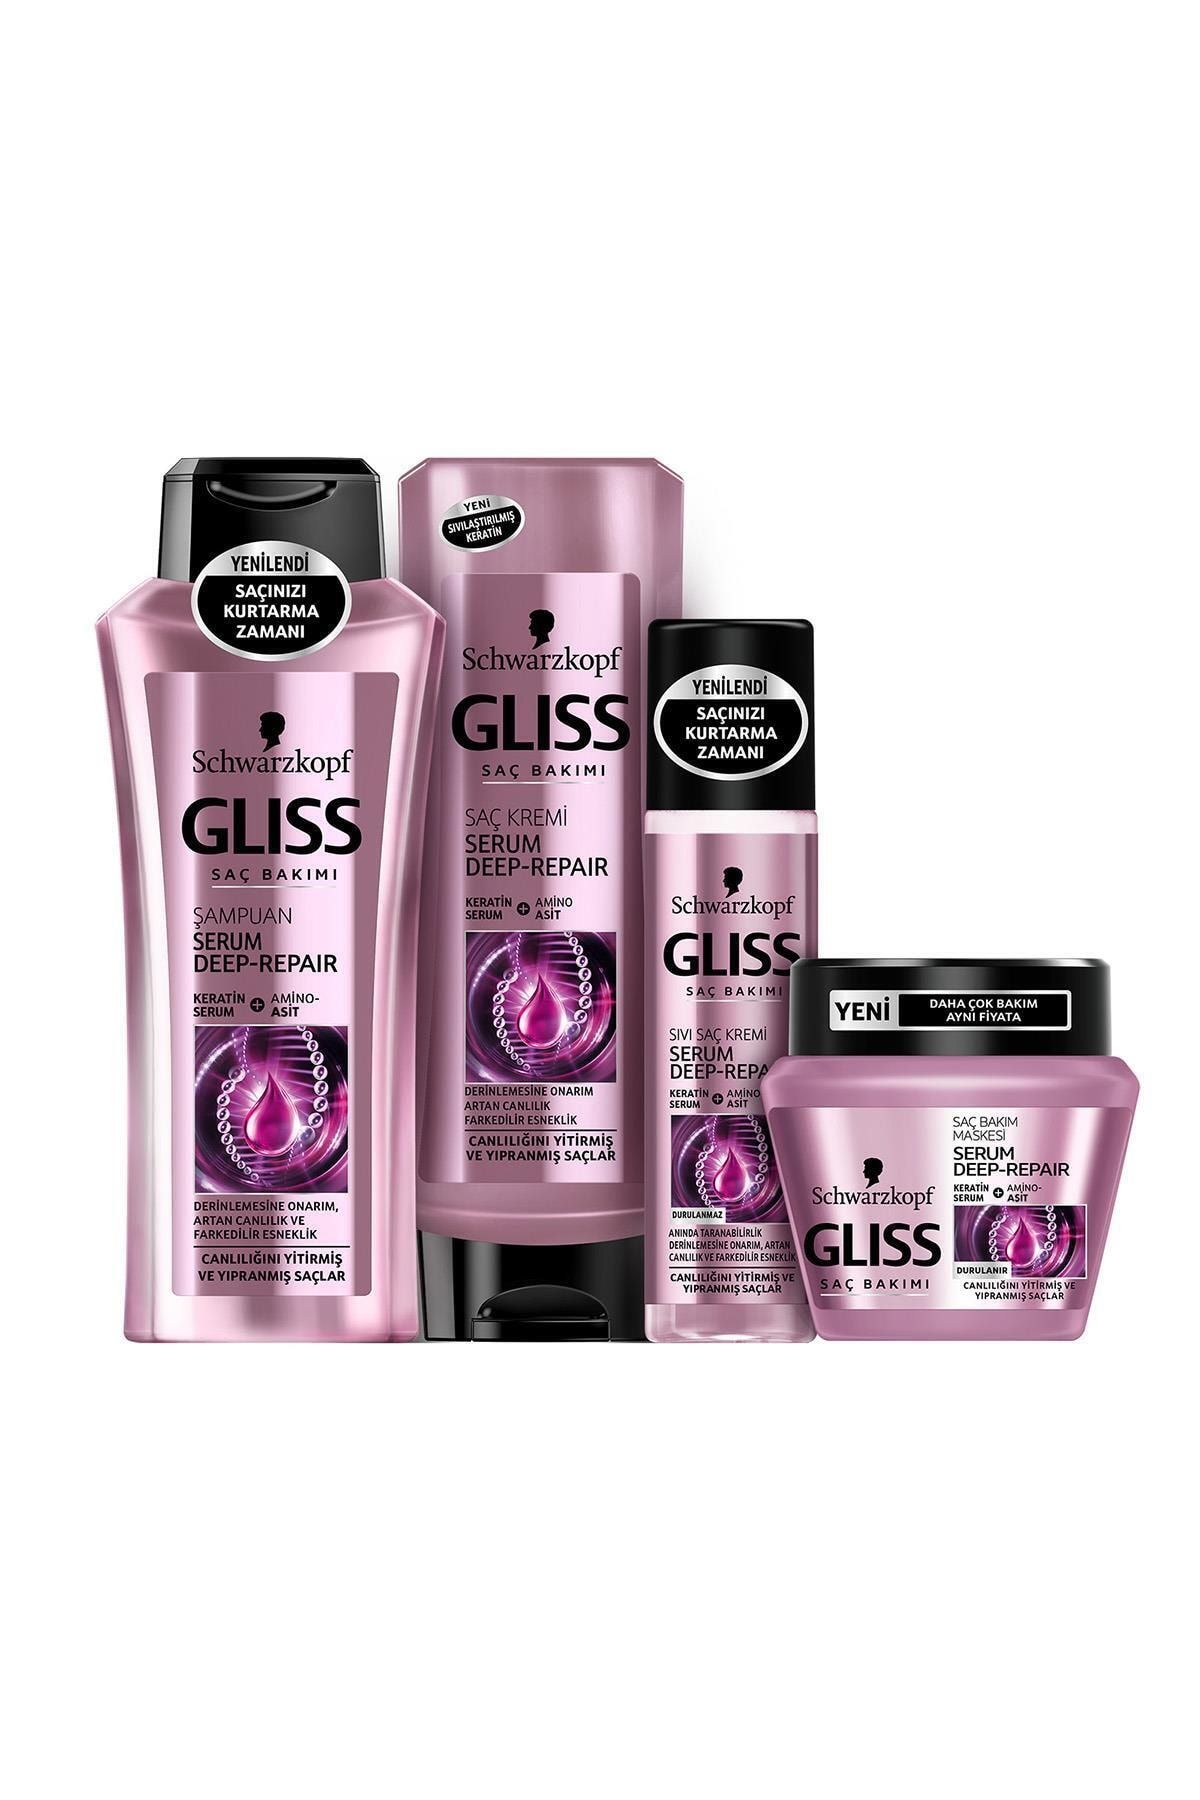 Gliss serum deep repair 360ml şampuan + 360ml saç kremi + 100ml serum + 200ml sıvı saç kremi